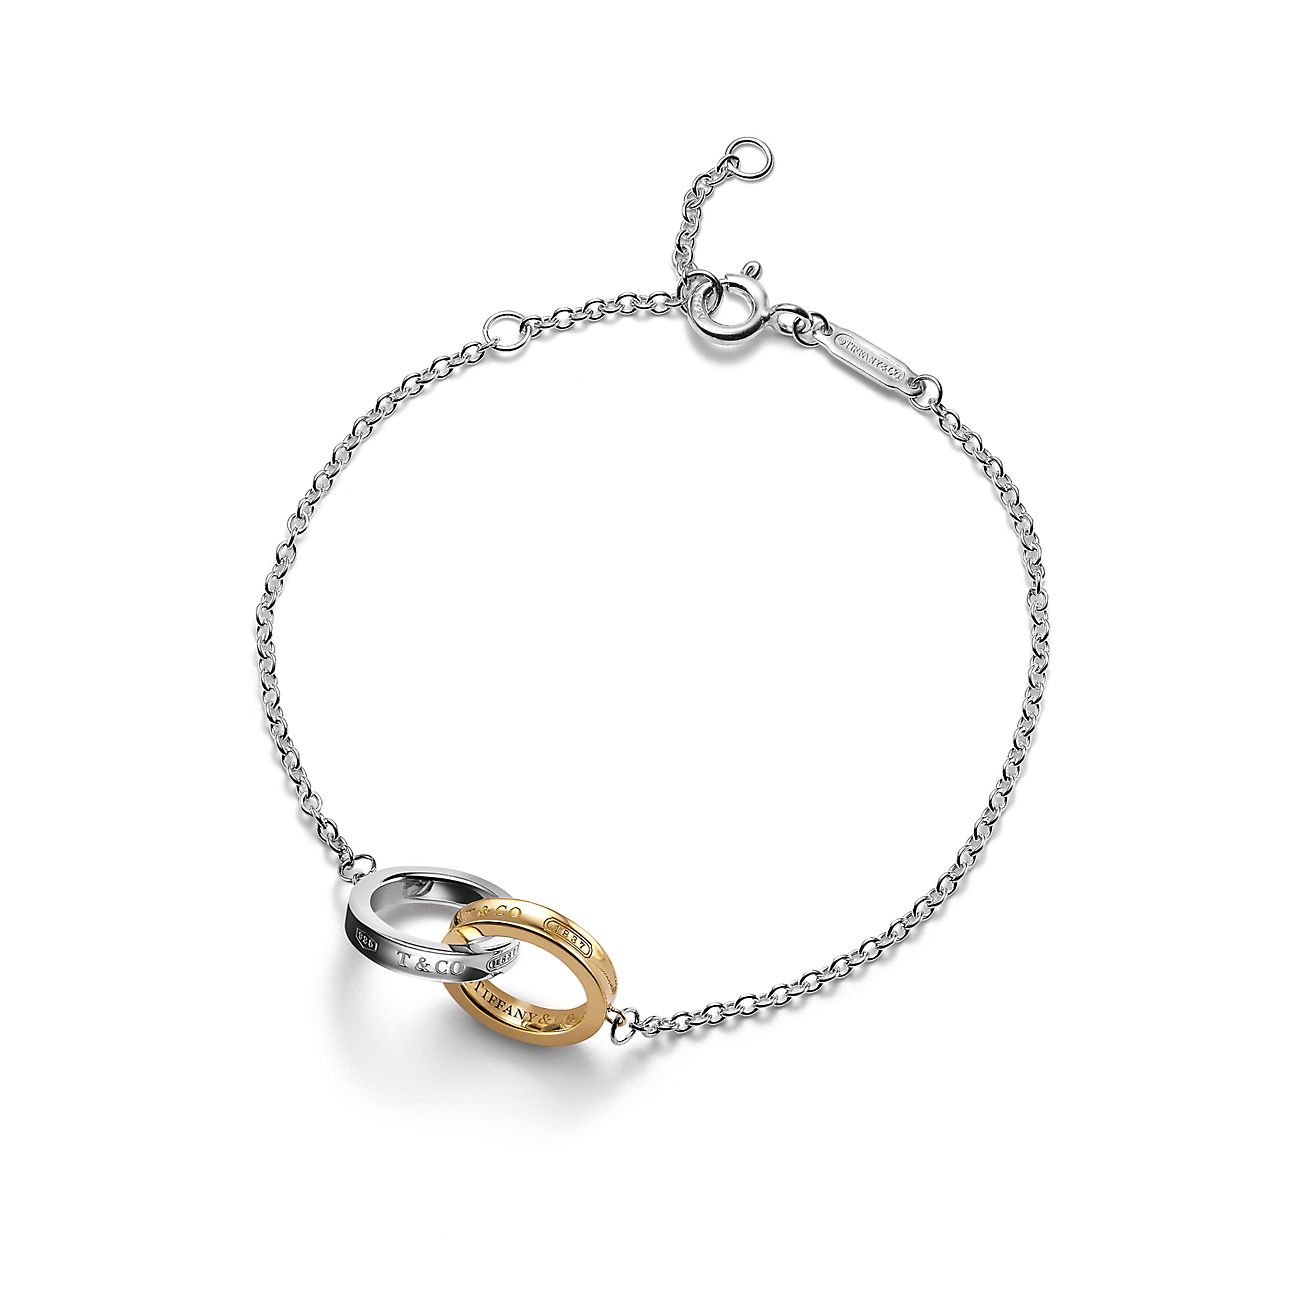 Tiffany Lock Bangle in Yellow Gold with Diamond Accents | Tiffany & Co.